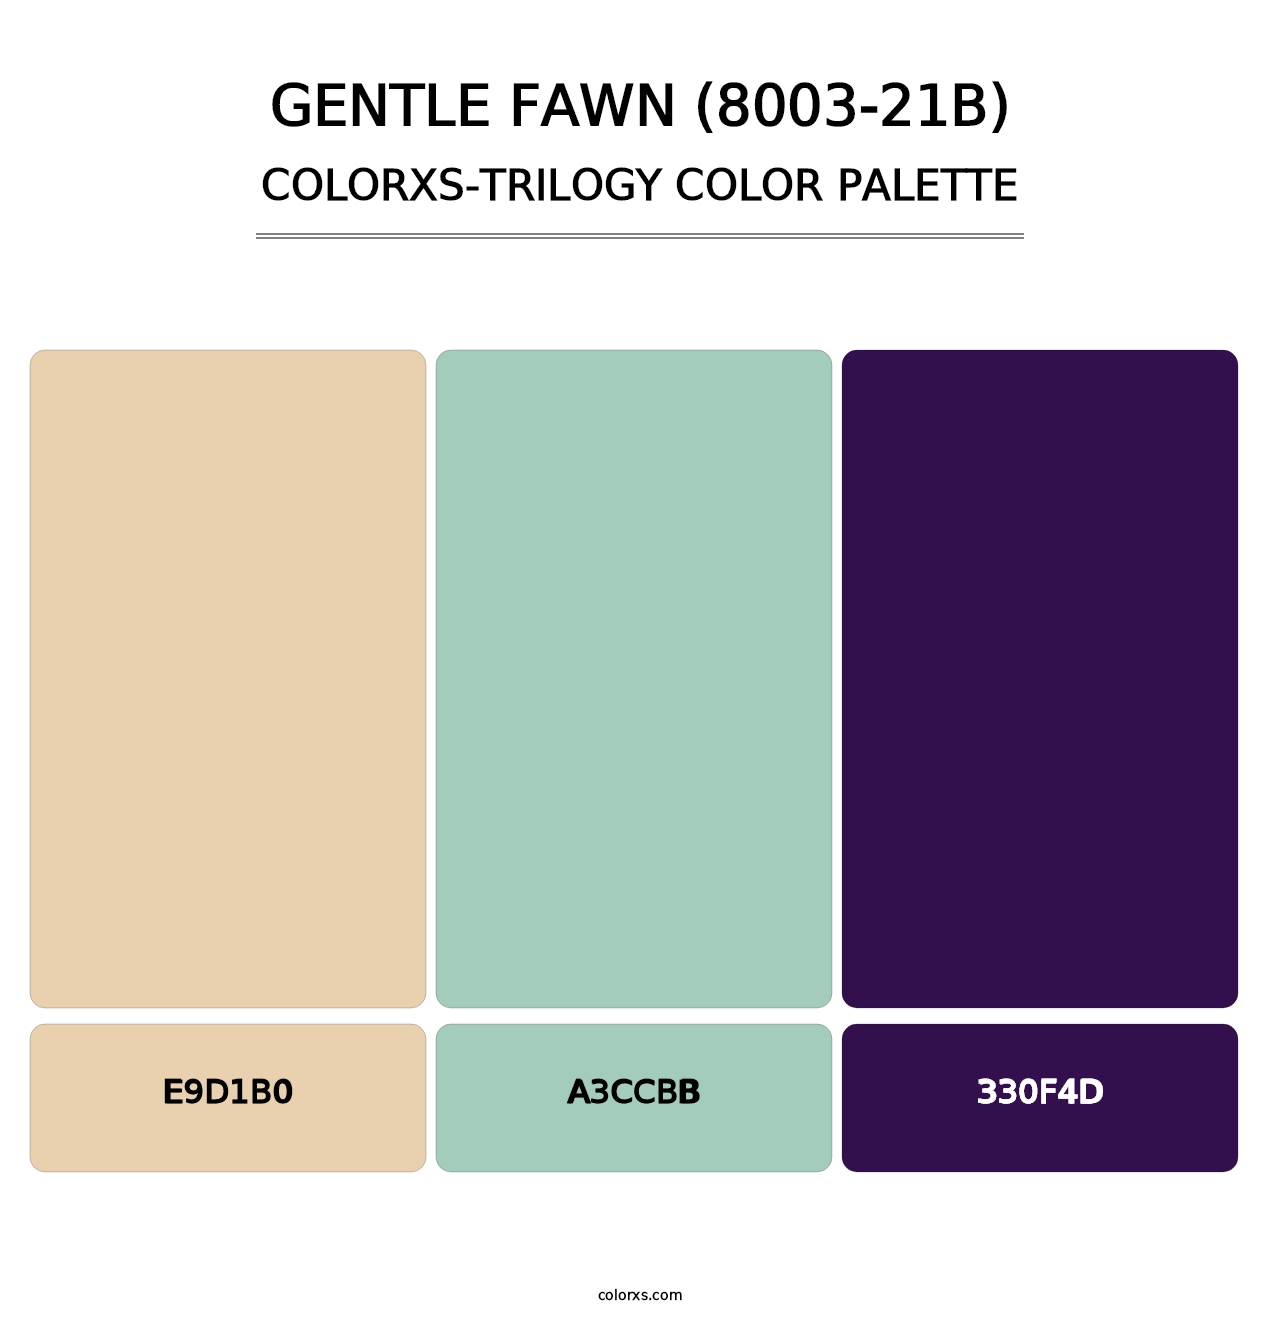 Gentle Fawn (8003-21B) - Colorxs Trilogy Palette